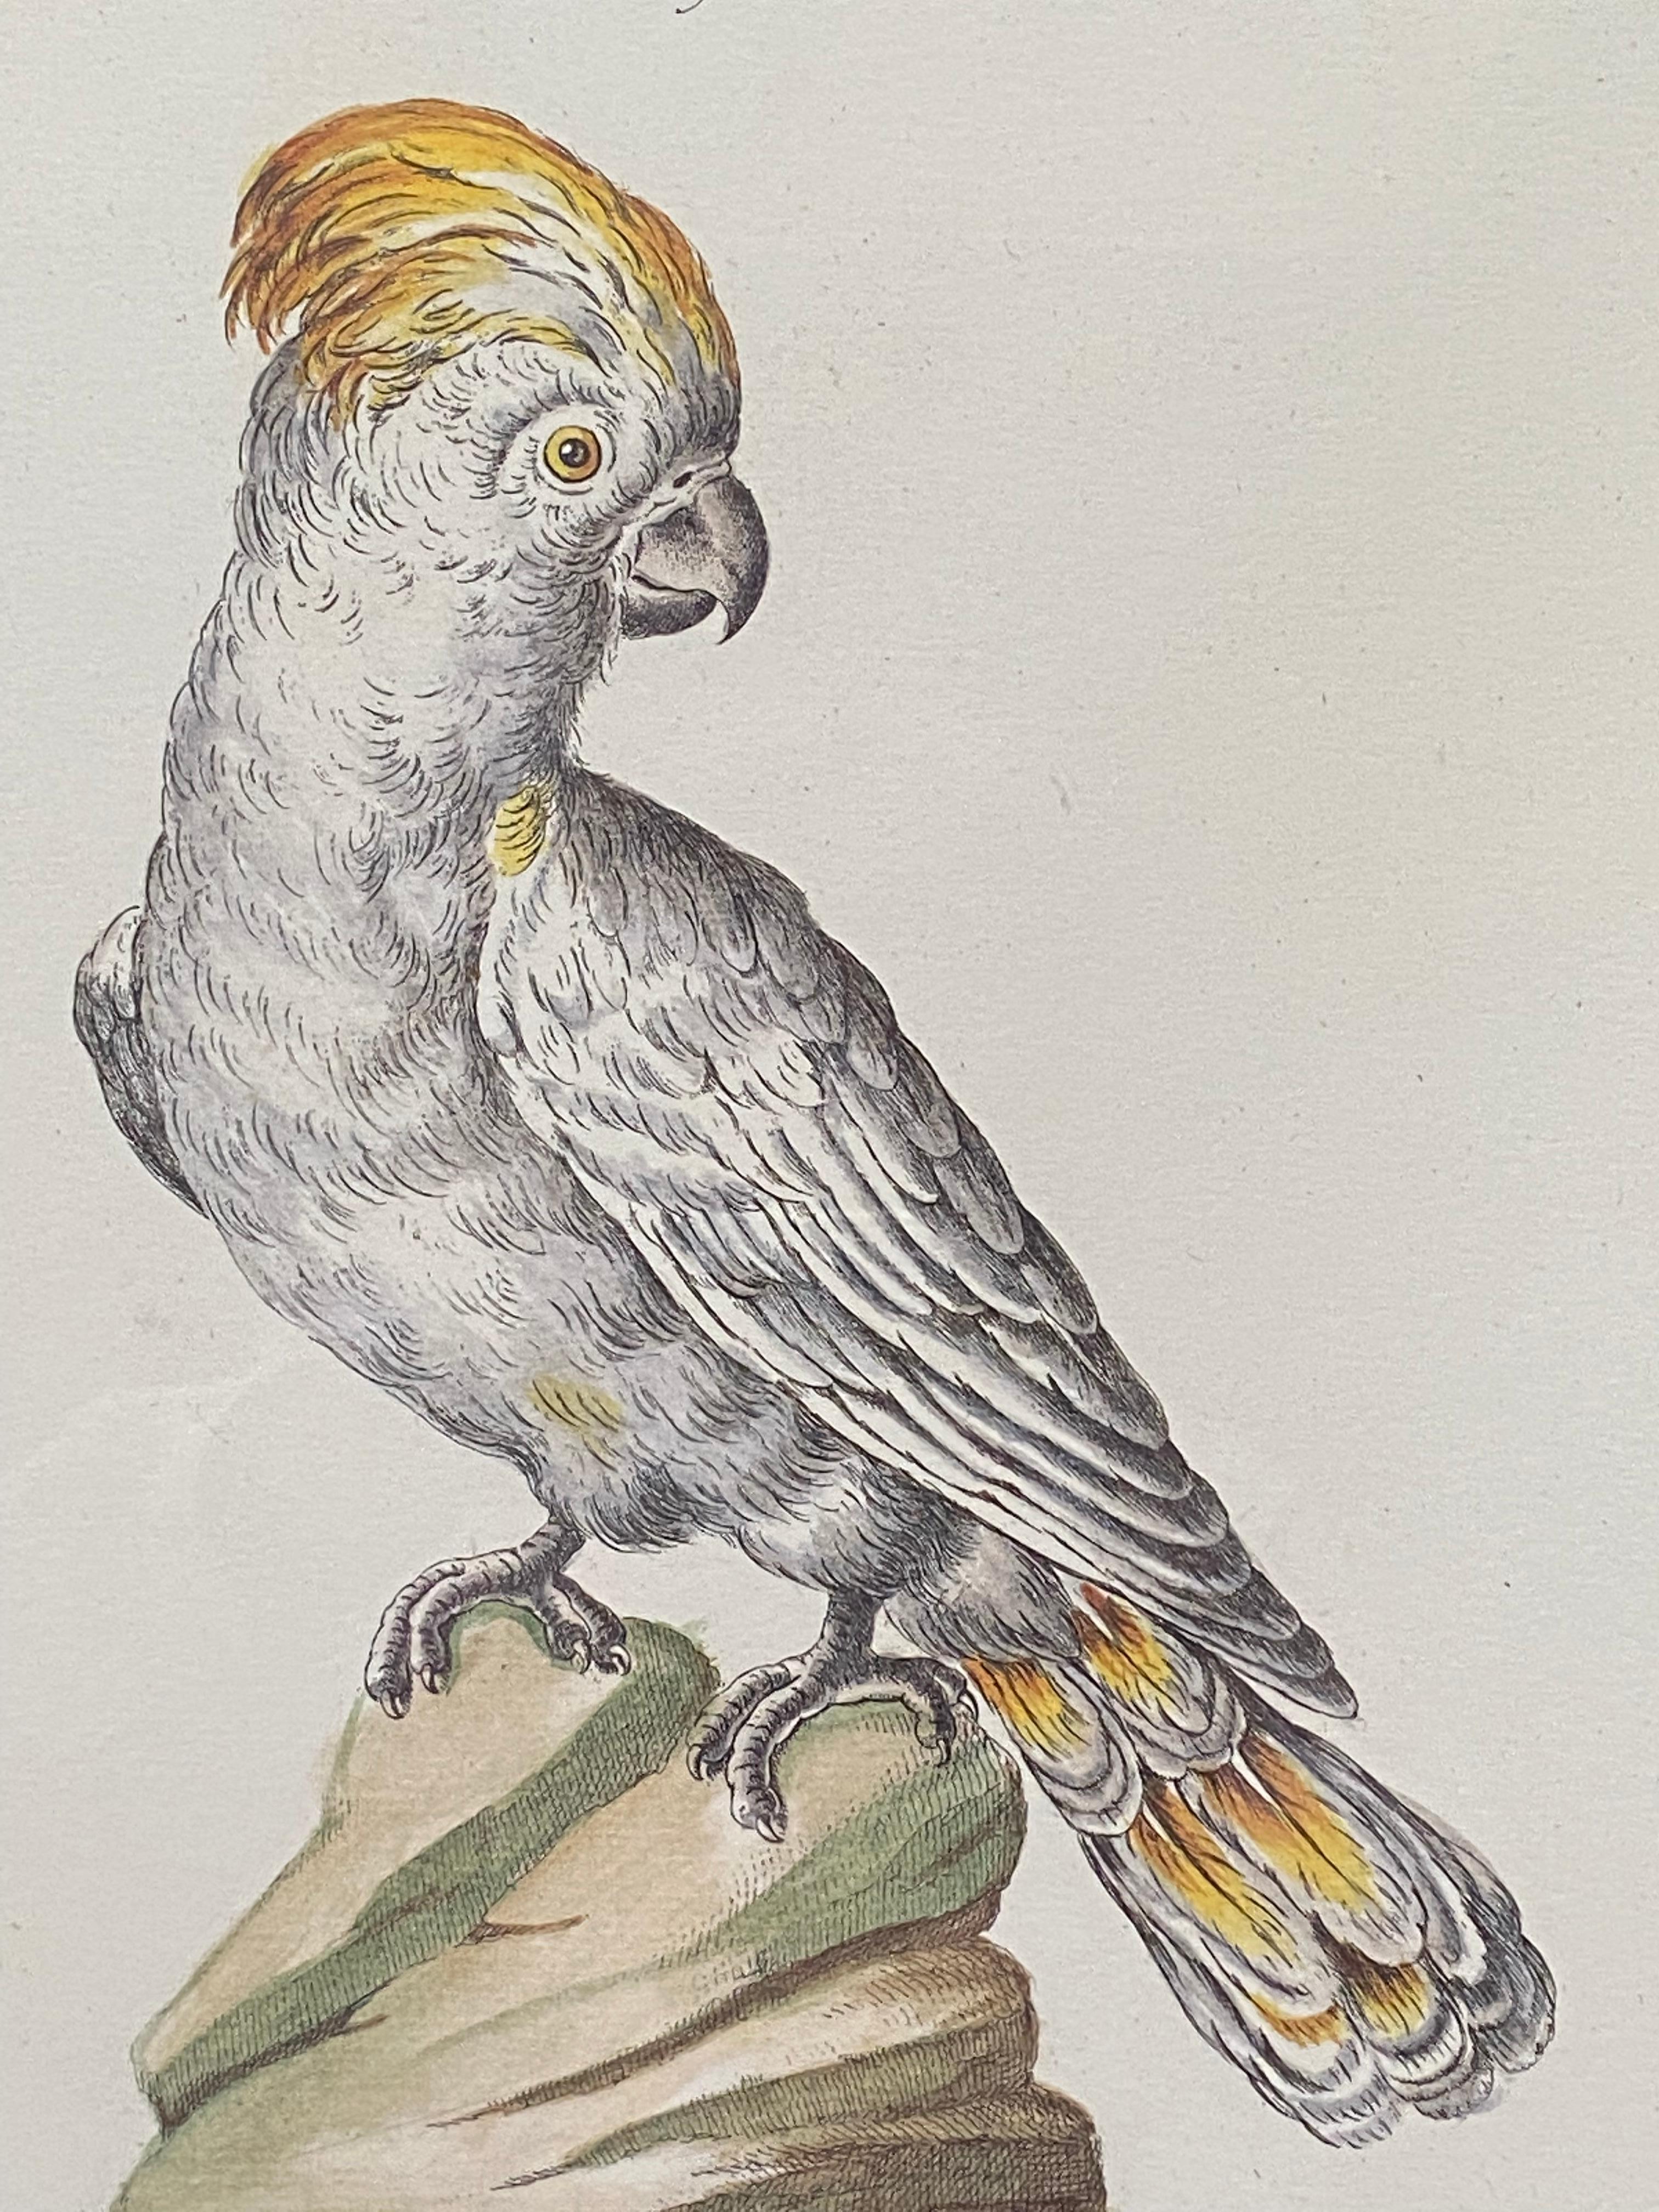 Saviero Manetti Animal Print - “Yellow Crested Parrot”